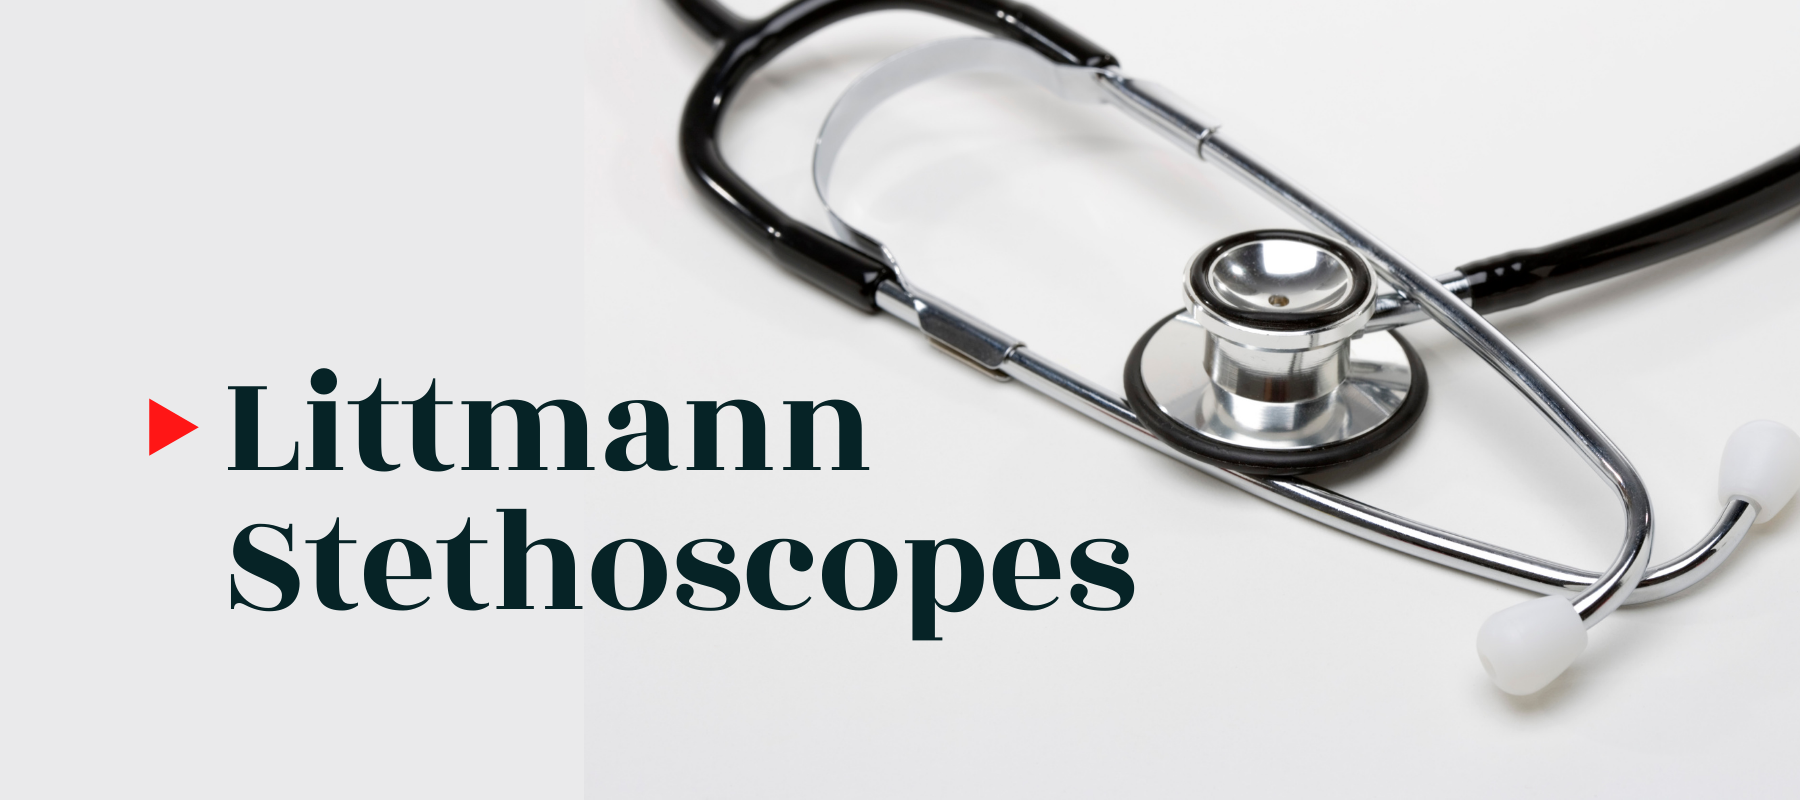 Littmann Stethoscopes